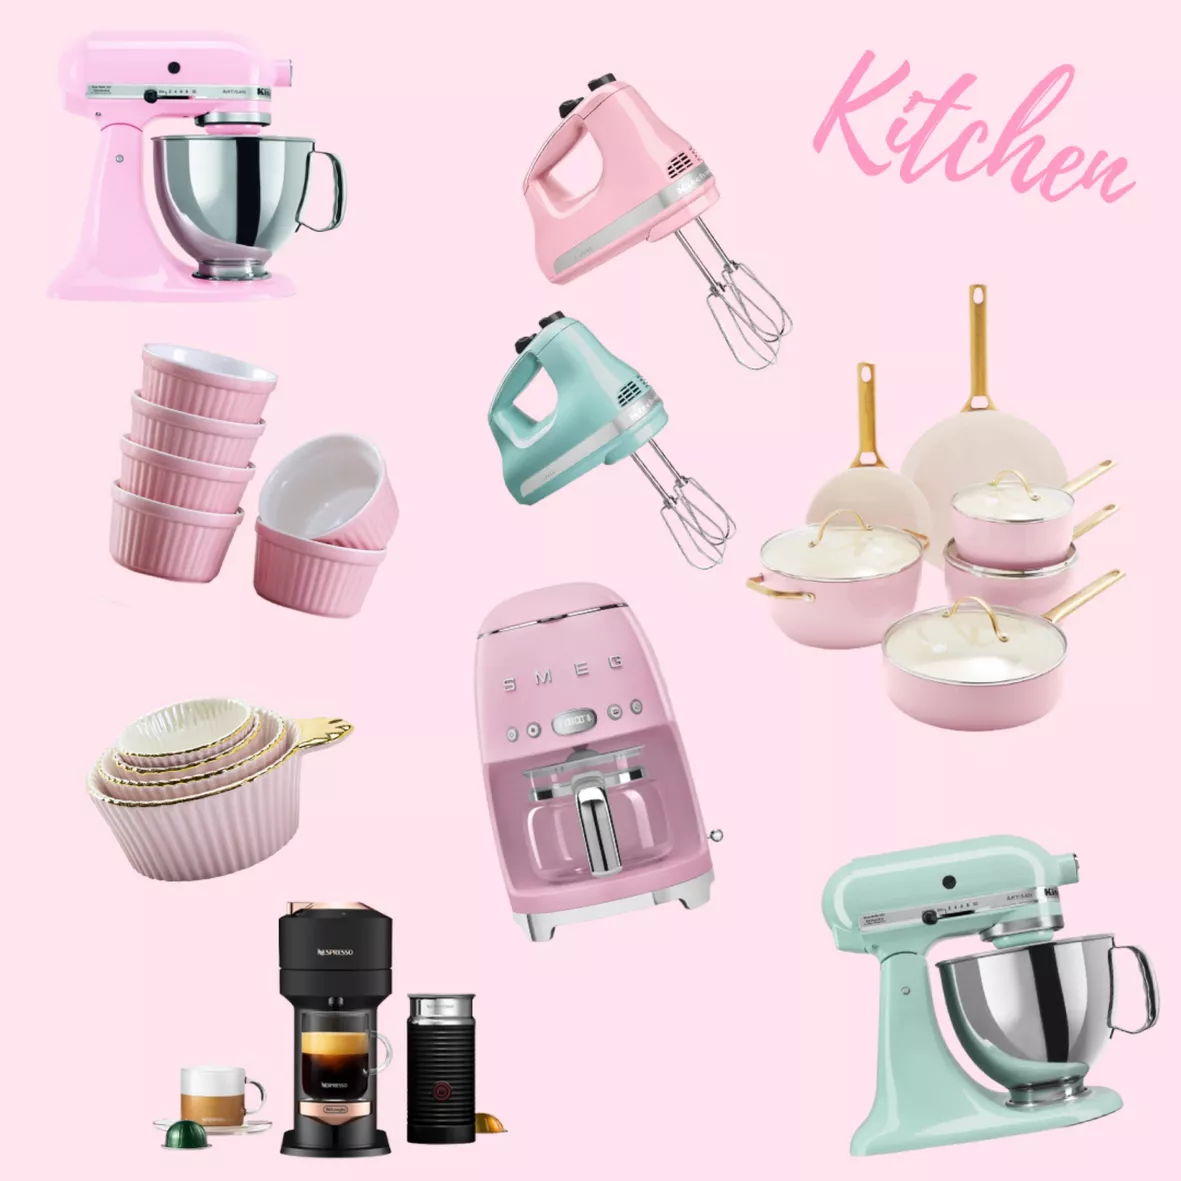 KitchenAid RRK150PK 5 Qt. Artisan Series - Pink (Renewed)